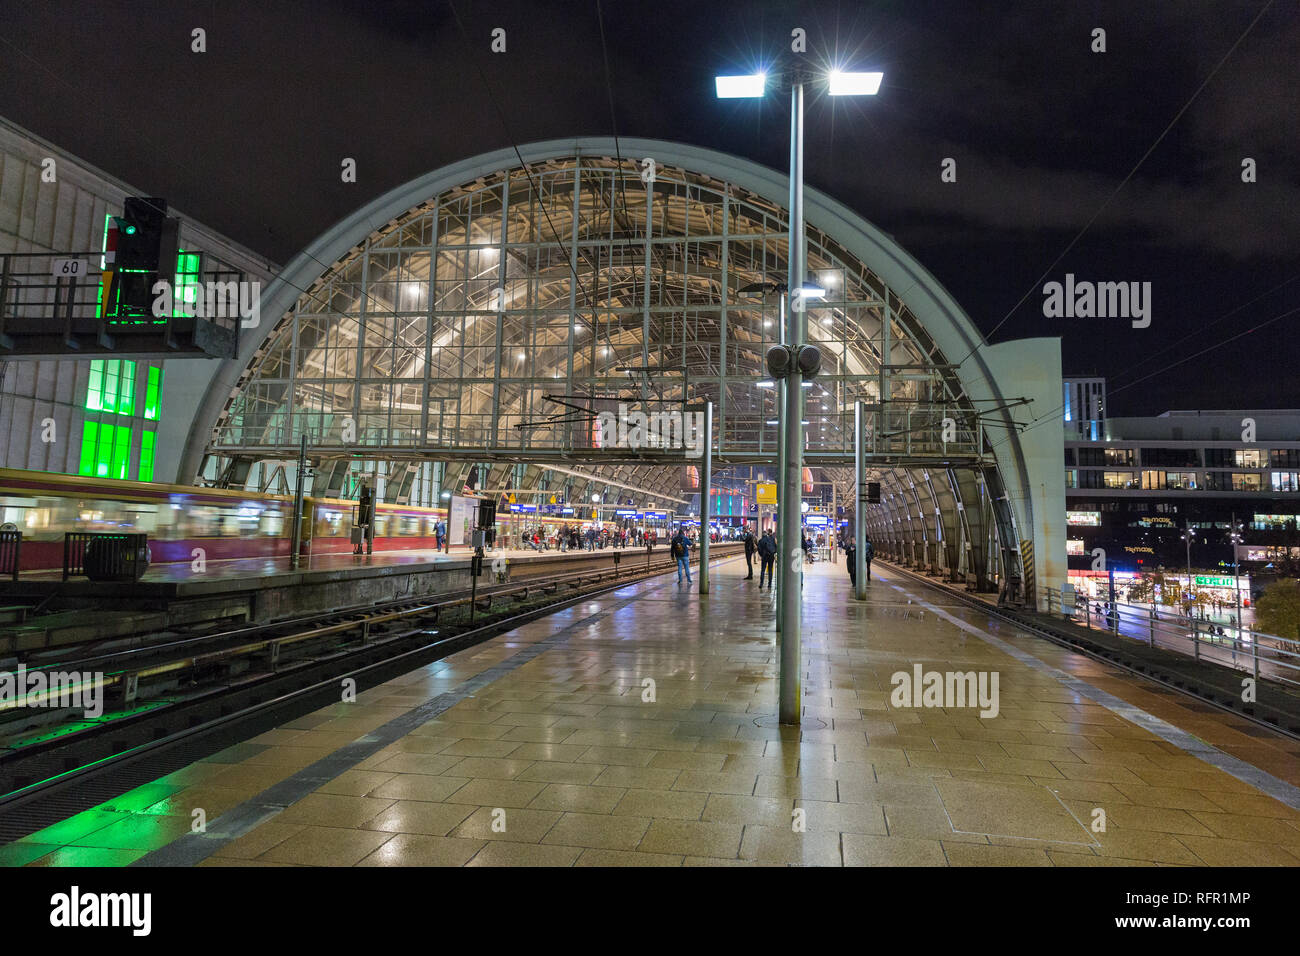 BERLIN, GERMANY - NOVEMBER 13, 2018: People on night platform of Alexanderplatz Bahnhof metro station. Berlin is the capital and German largest city b Stock Photo